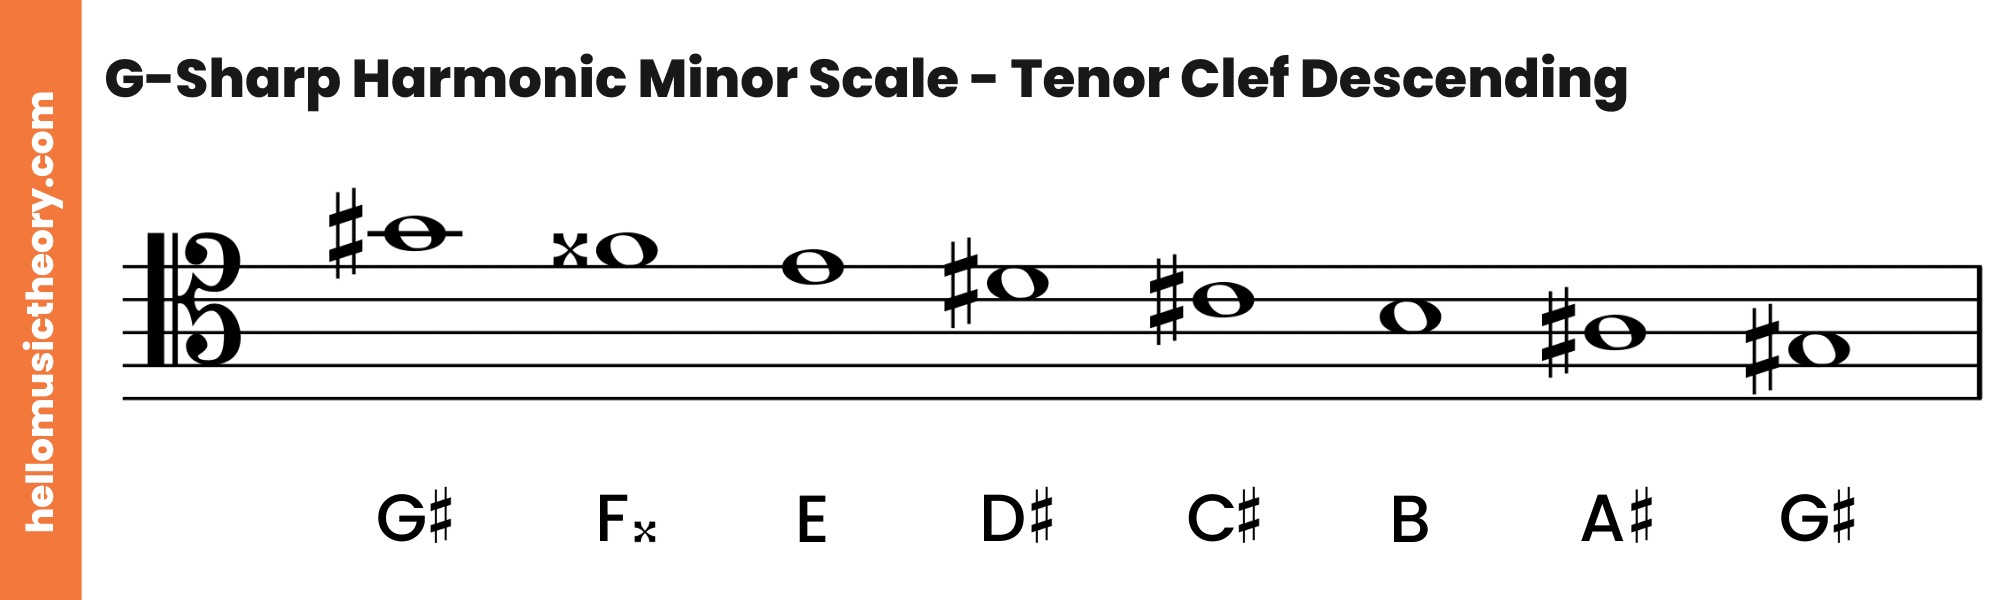 G-Sharp Harmonic Minor Scale Tenor Clef Descending